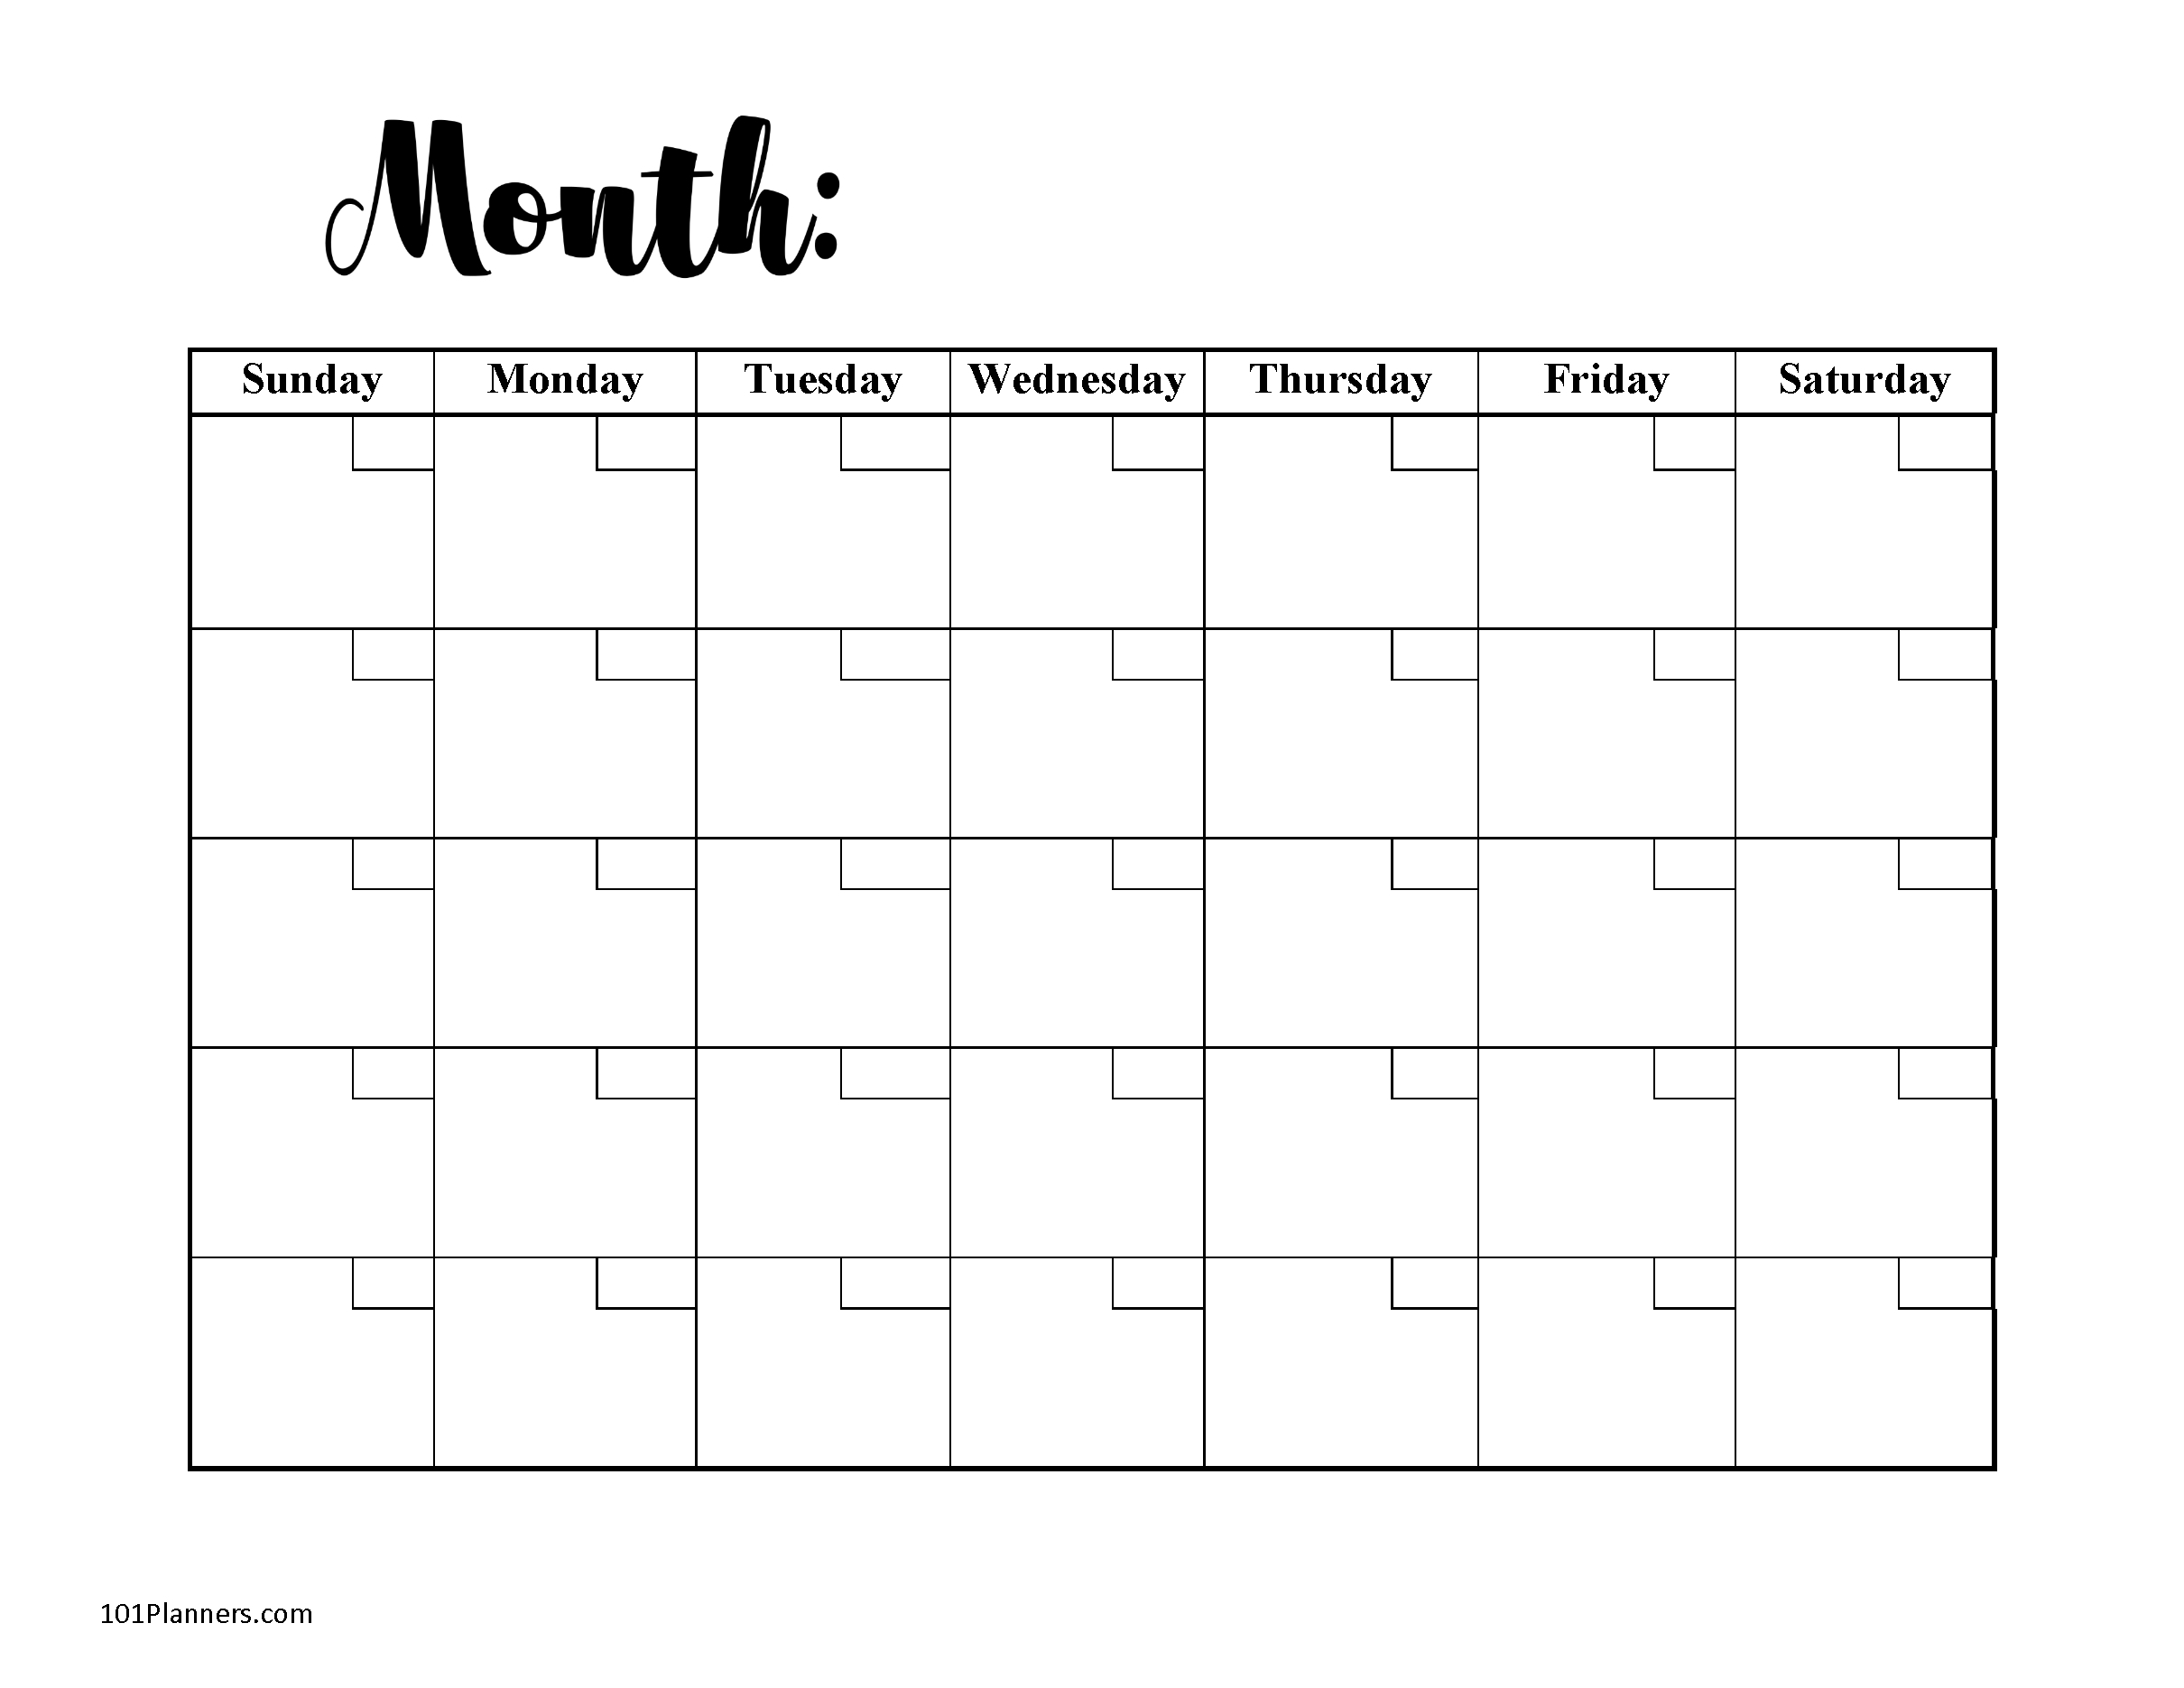 Blank Calendar With No Dates  Example Calendar Printable with regard to Blank Printable Weekly Calendar